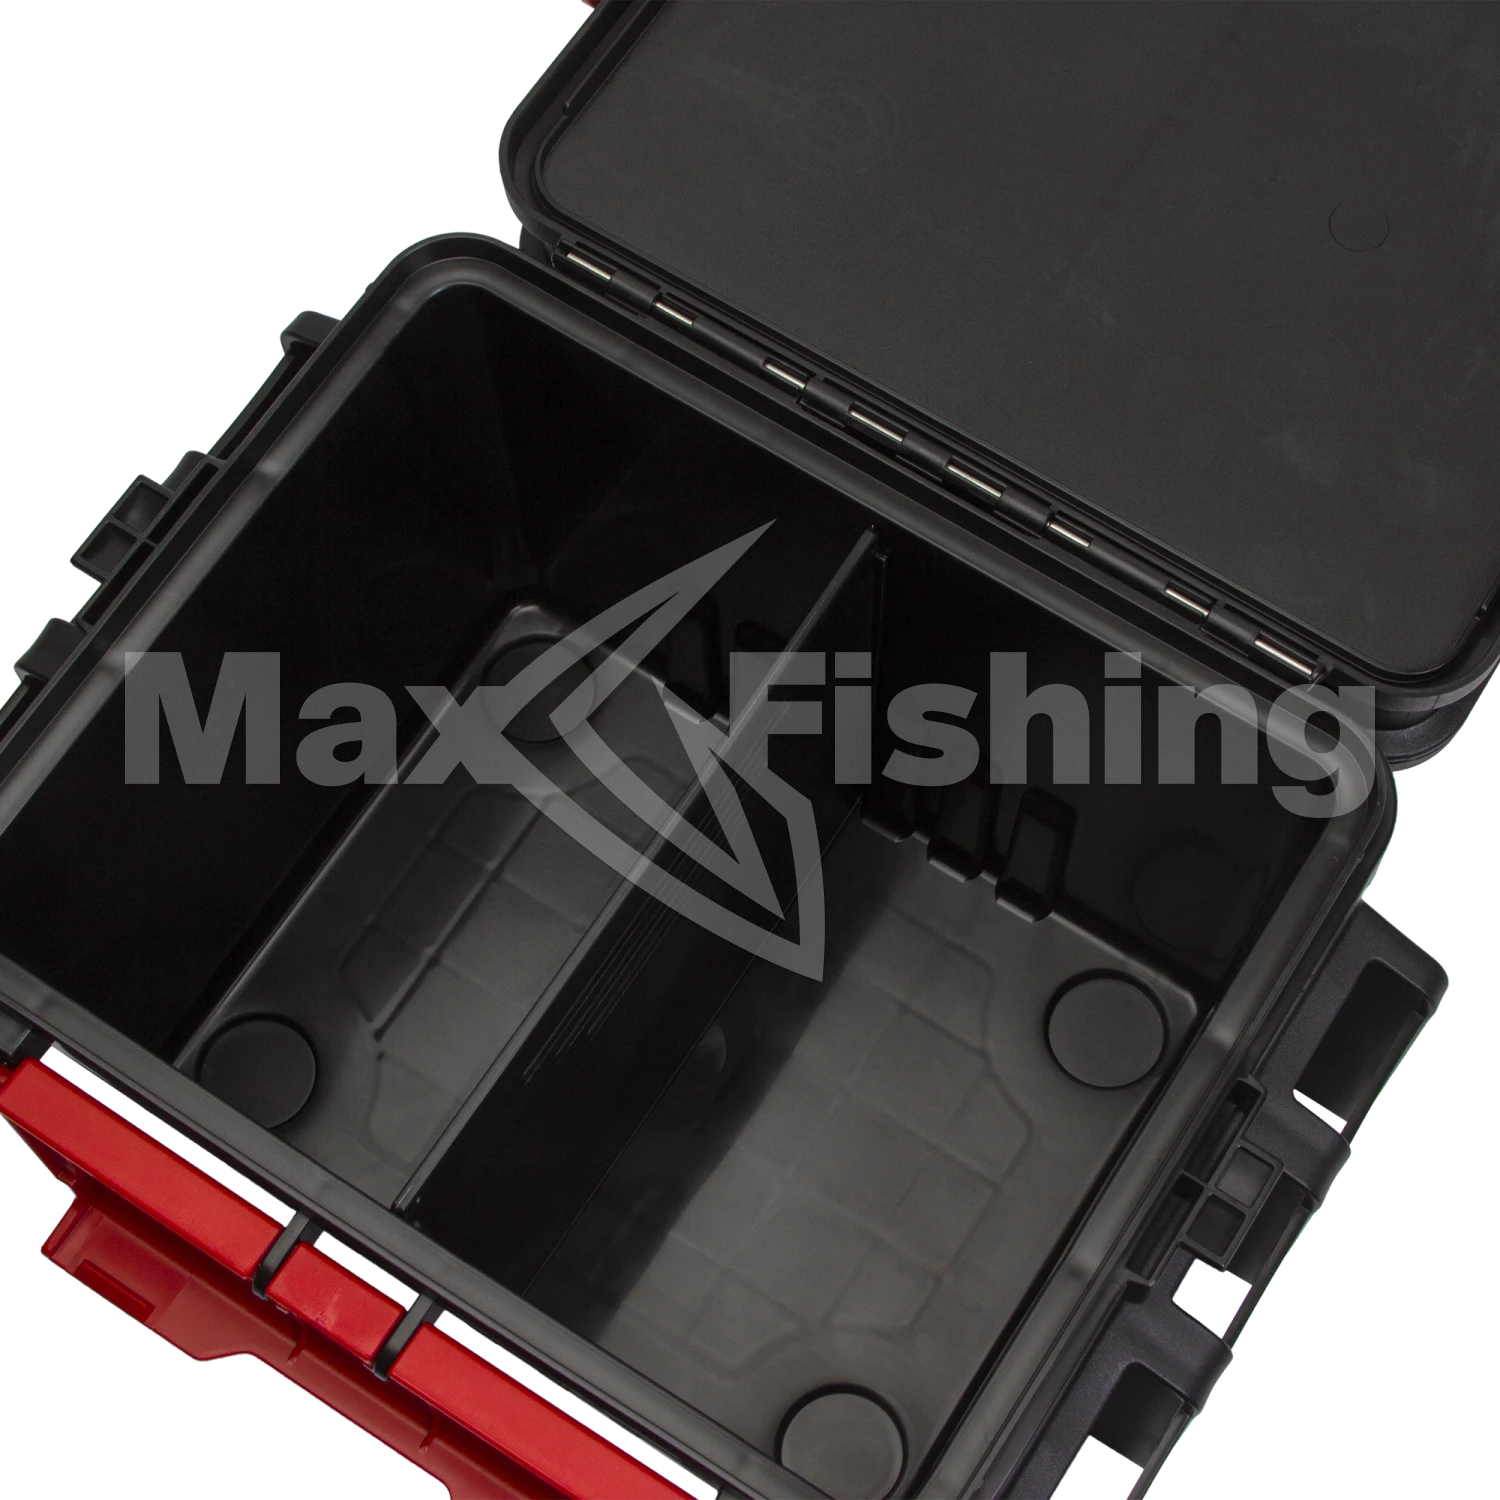 Ящик рыболовный Daiwa Tackle Box TB3000 Black/Red